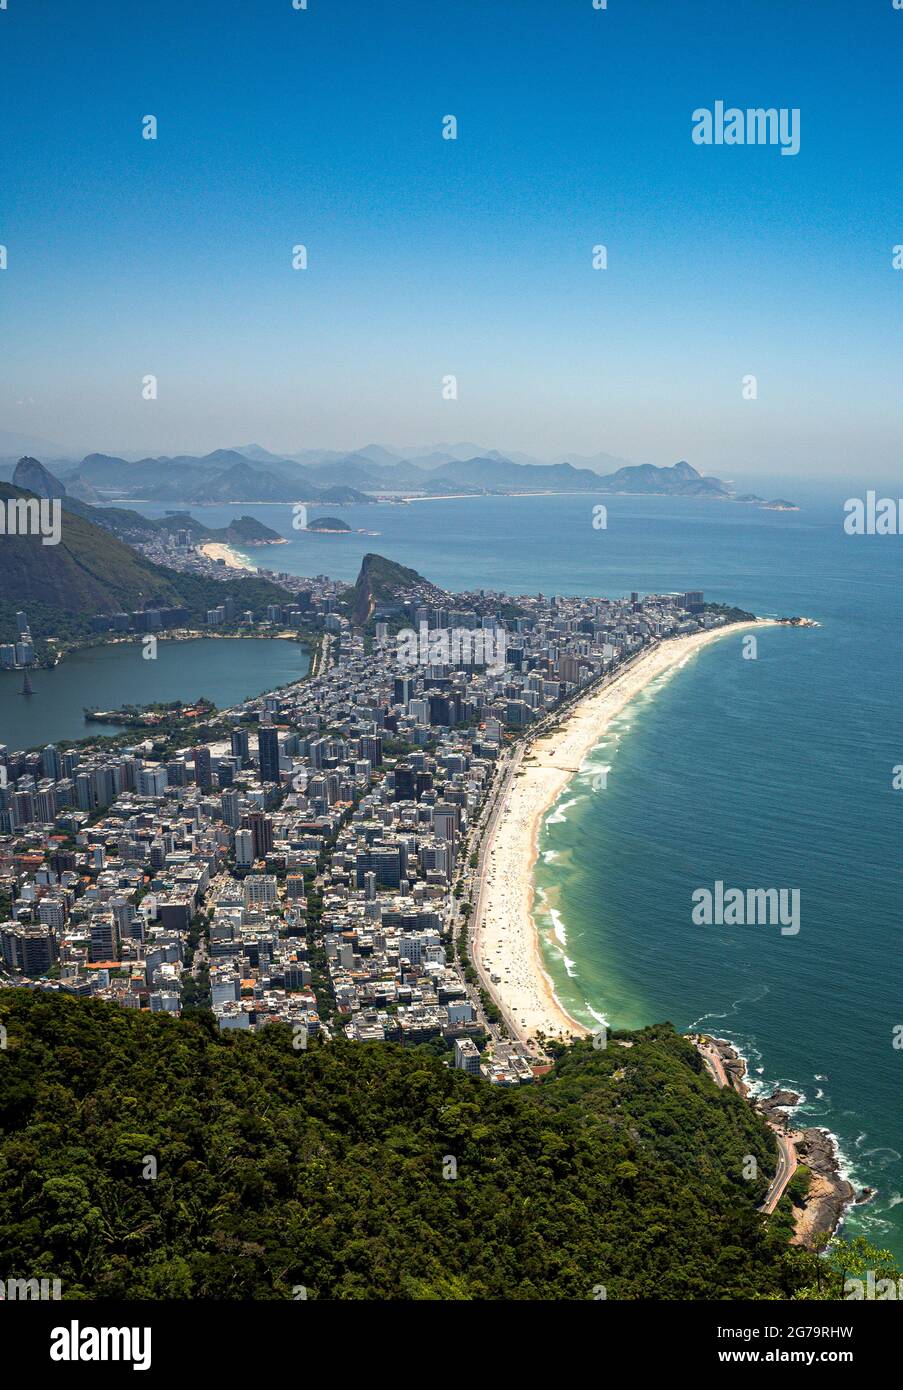 La vista panoramica di Ipanema/Leblon Beach e Lagoa Rodrigo de Freitas, vista dalla cima del Dois Irmaos Two Brothers Mountain a Rio de Janeiro, Brasile Foto Stock